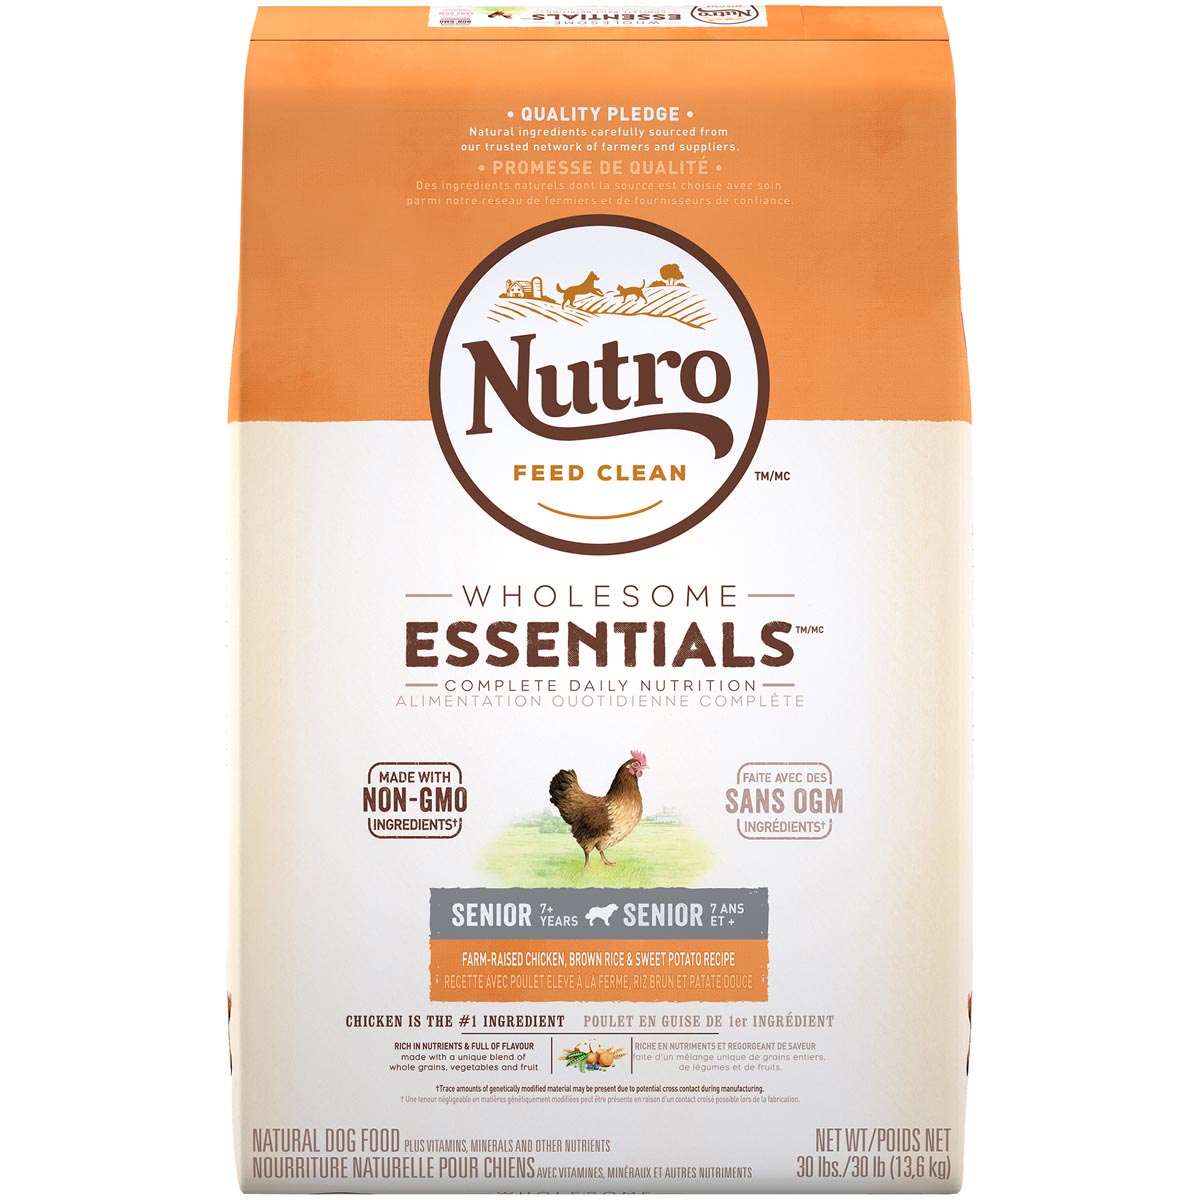 Nutro Feed Clean Wholesome Essentials Farm-Raised Chicken, Brown Rice & Sweet Potato Recipe Senior 7